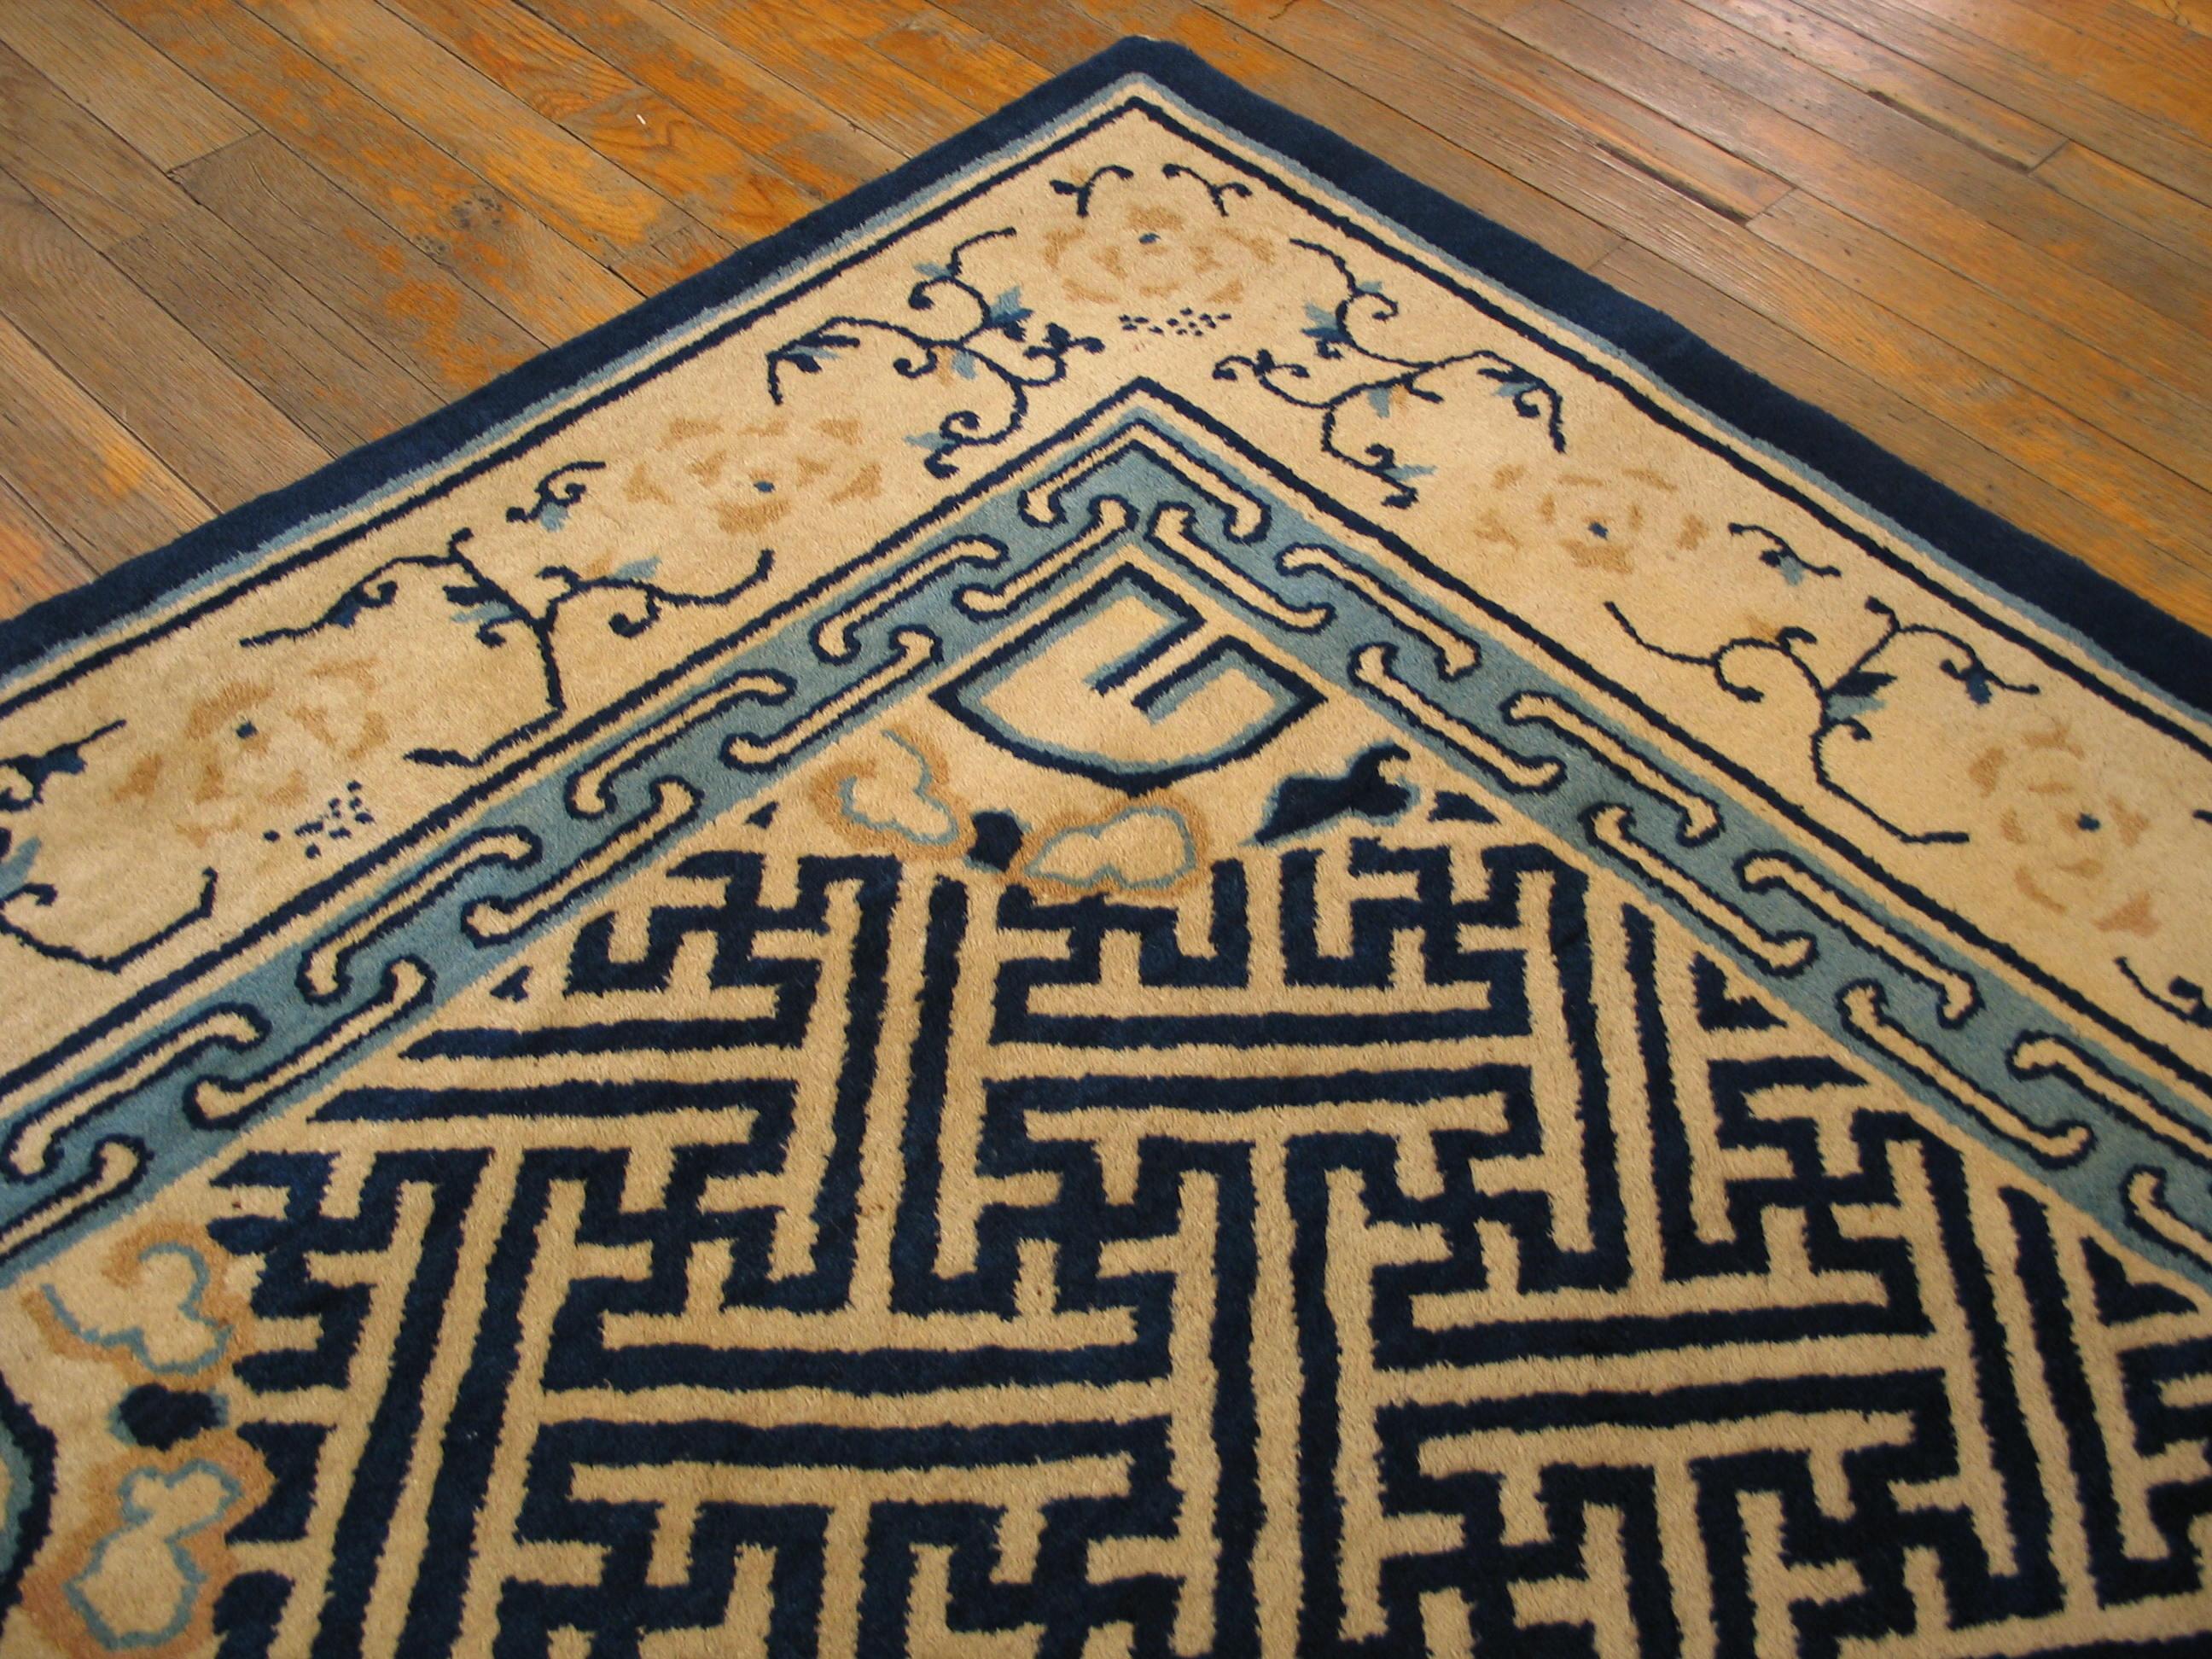 Antique Chinese - Peking rug. Measures: 4'4